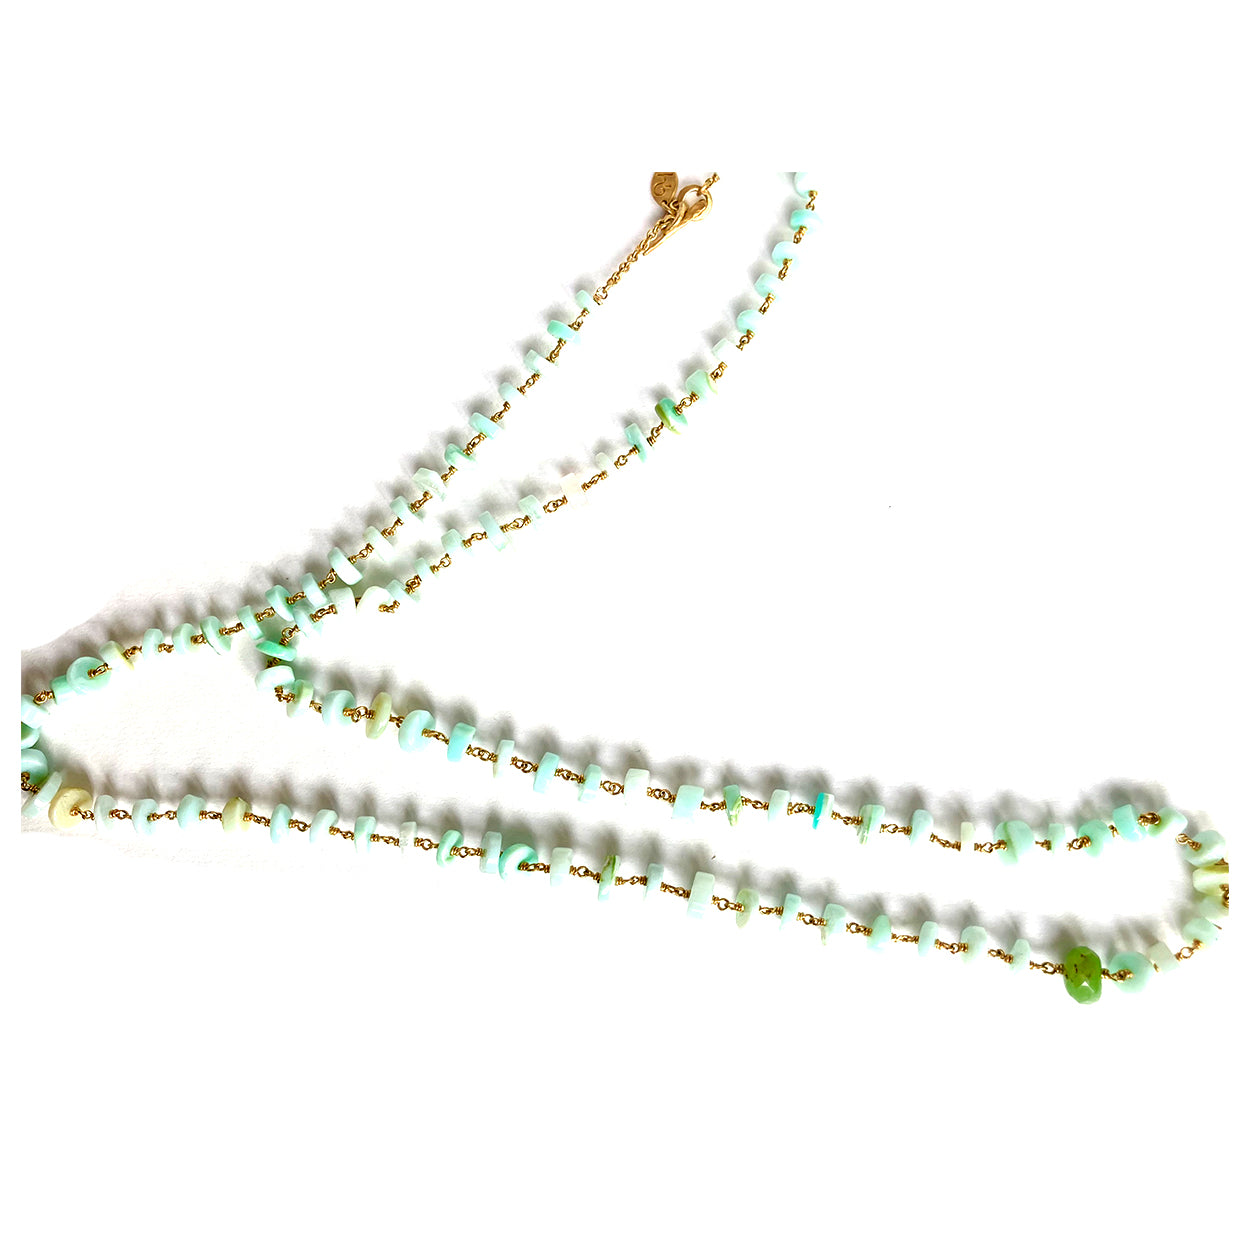 Peruvian opal beaded necklace